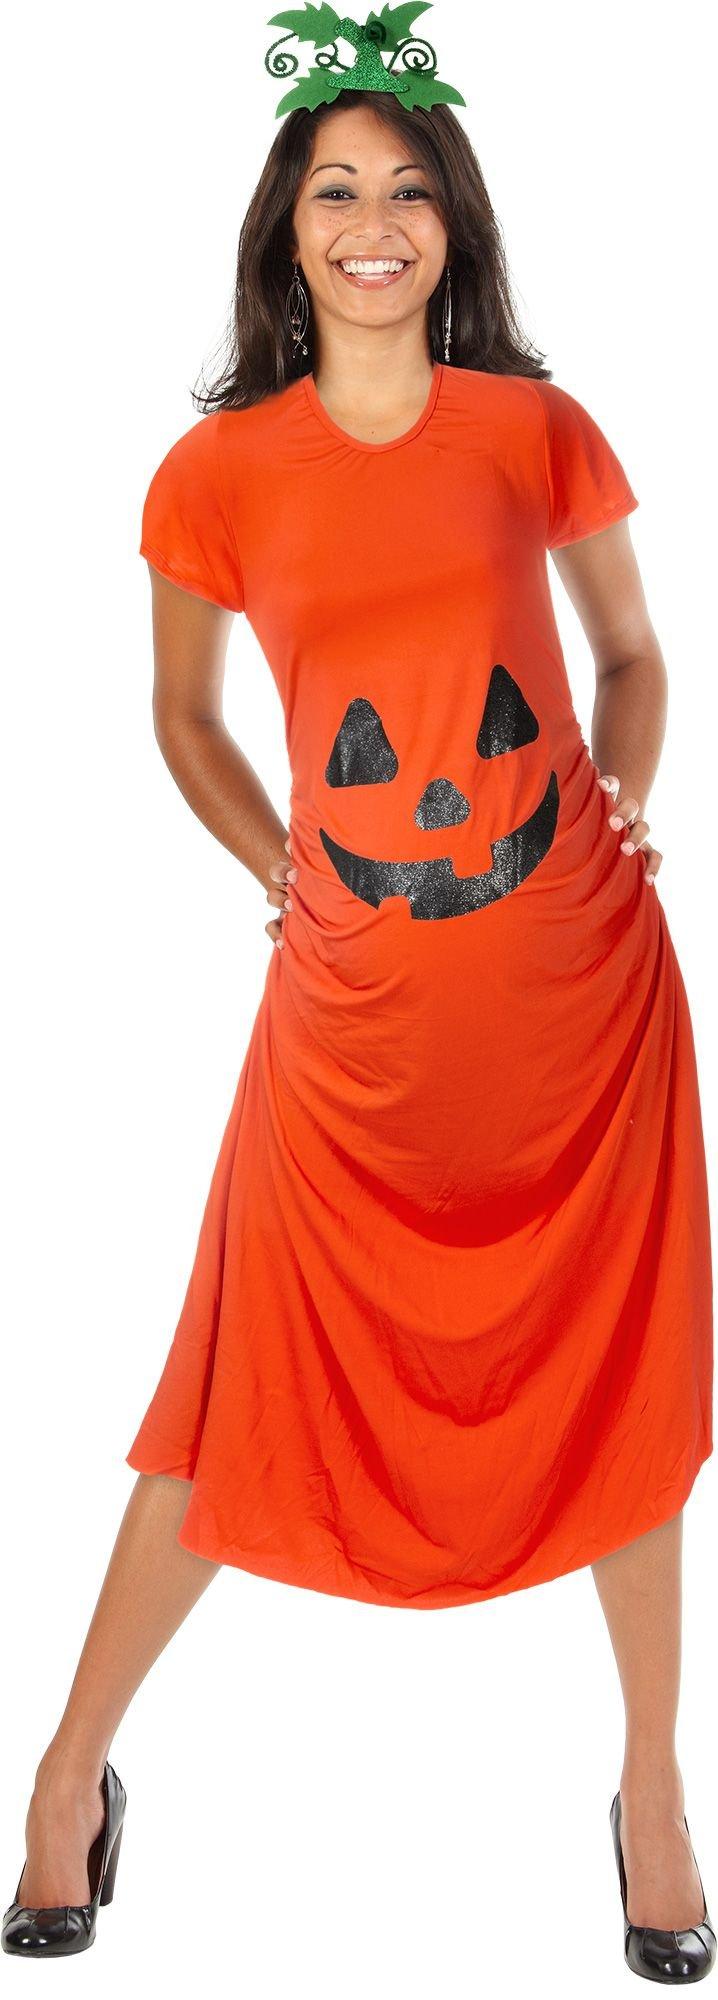 Almar Sales Pumpkin Maternity Halloween Costume for Women, Medium, Includes Midi-Length Dress and Headband